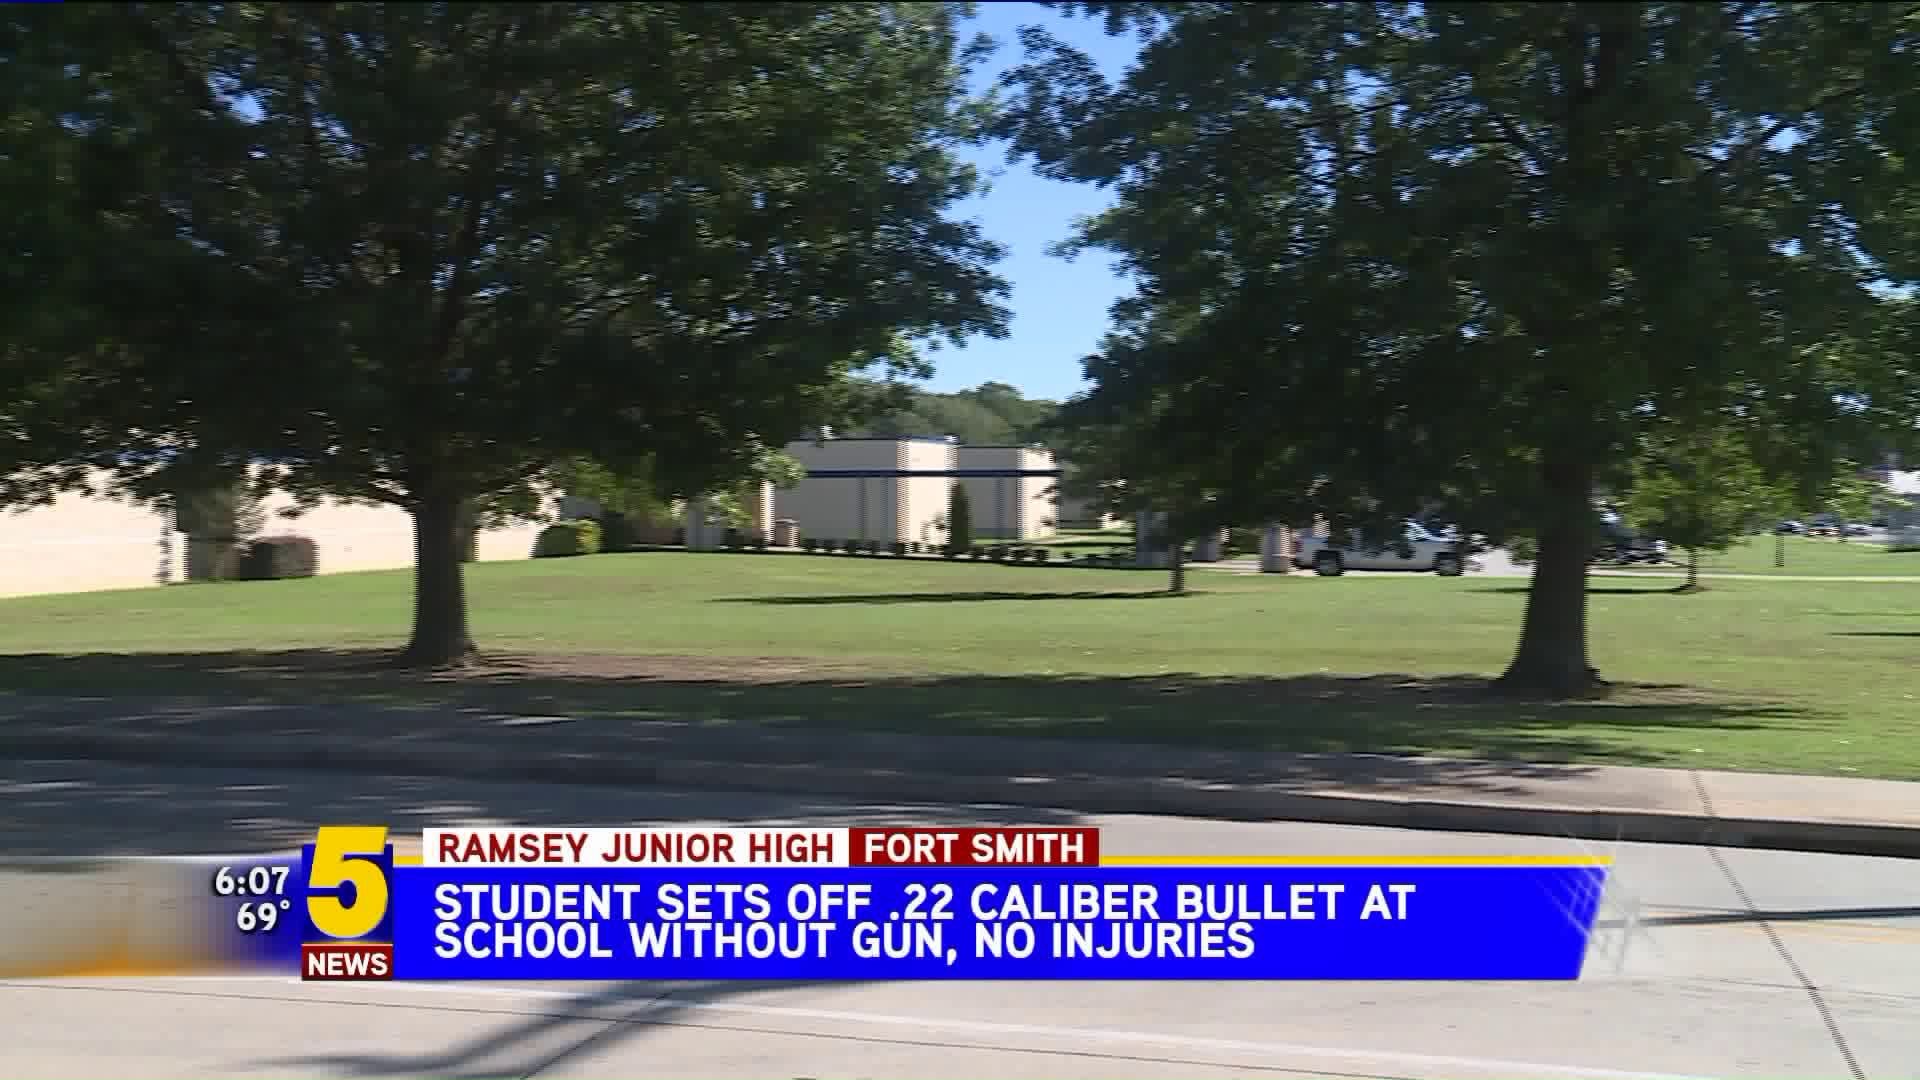 Student Sets Off .22 Caliber Bullet At Ramsey Jr. High